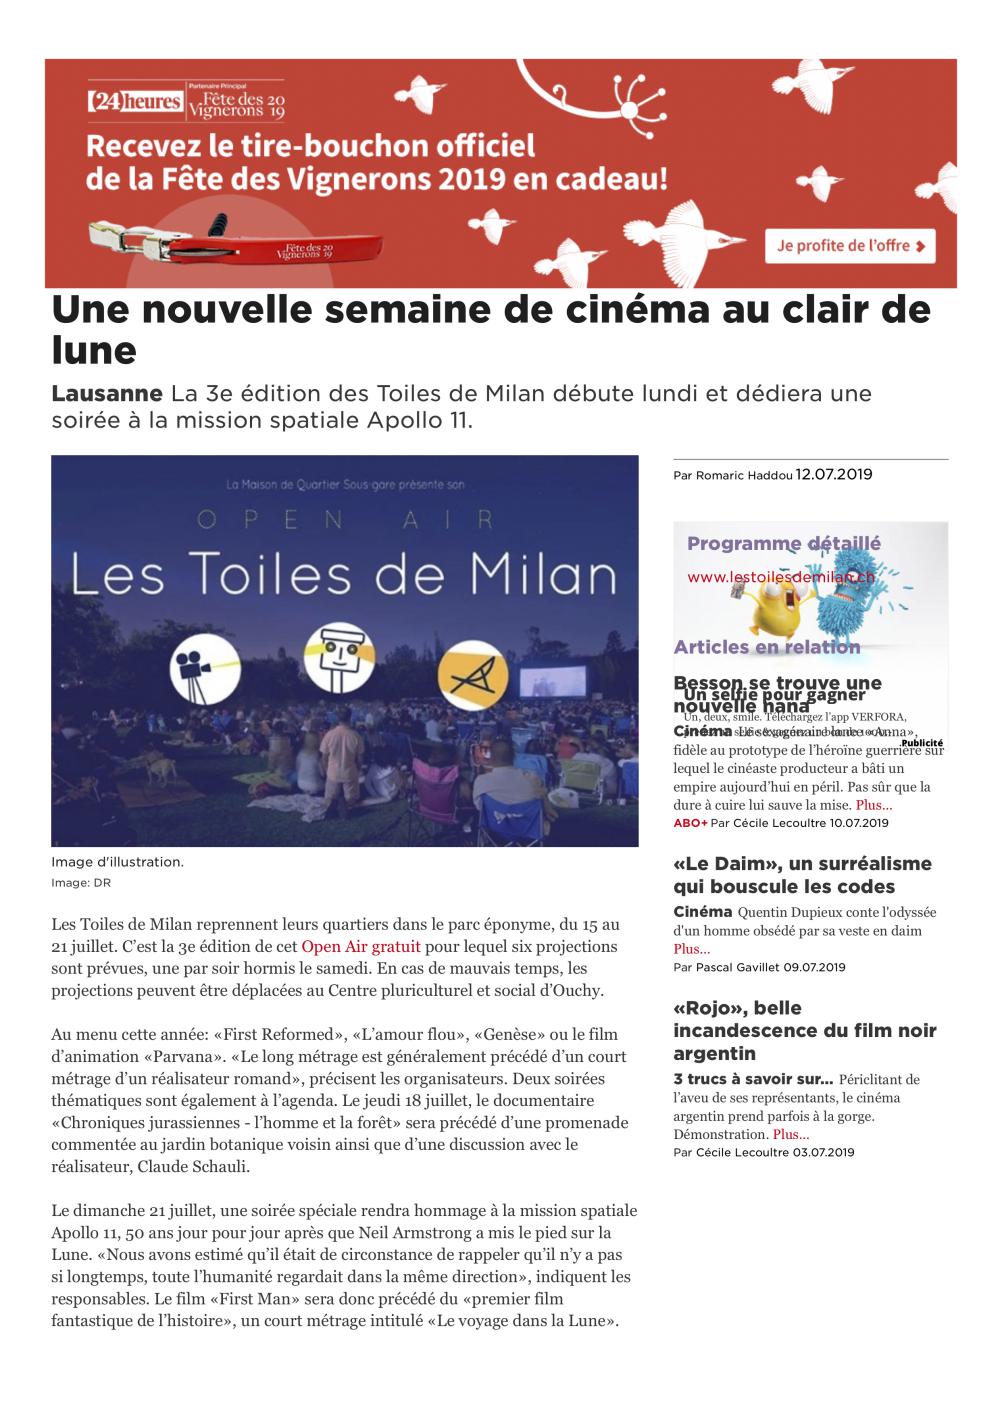 https://www.24heures.ch/vaud-regions/lausanne-region/nouvelle-semaine-cinema-clair-lune/story/10361199